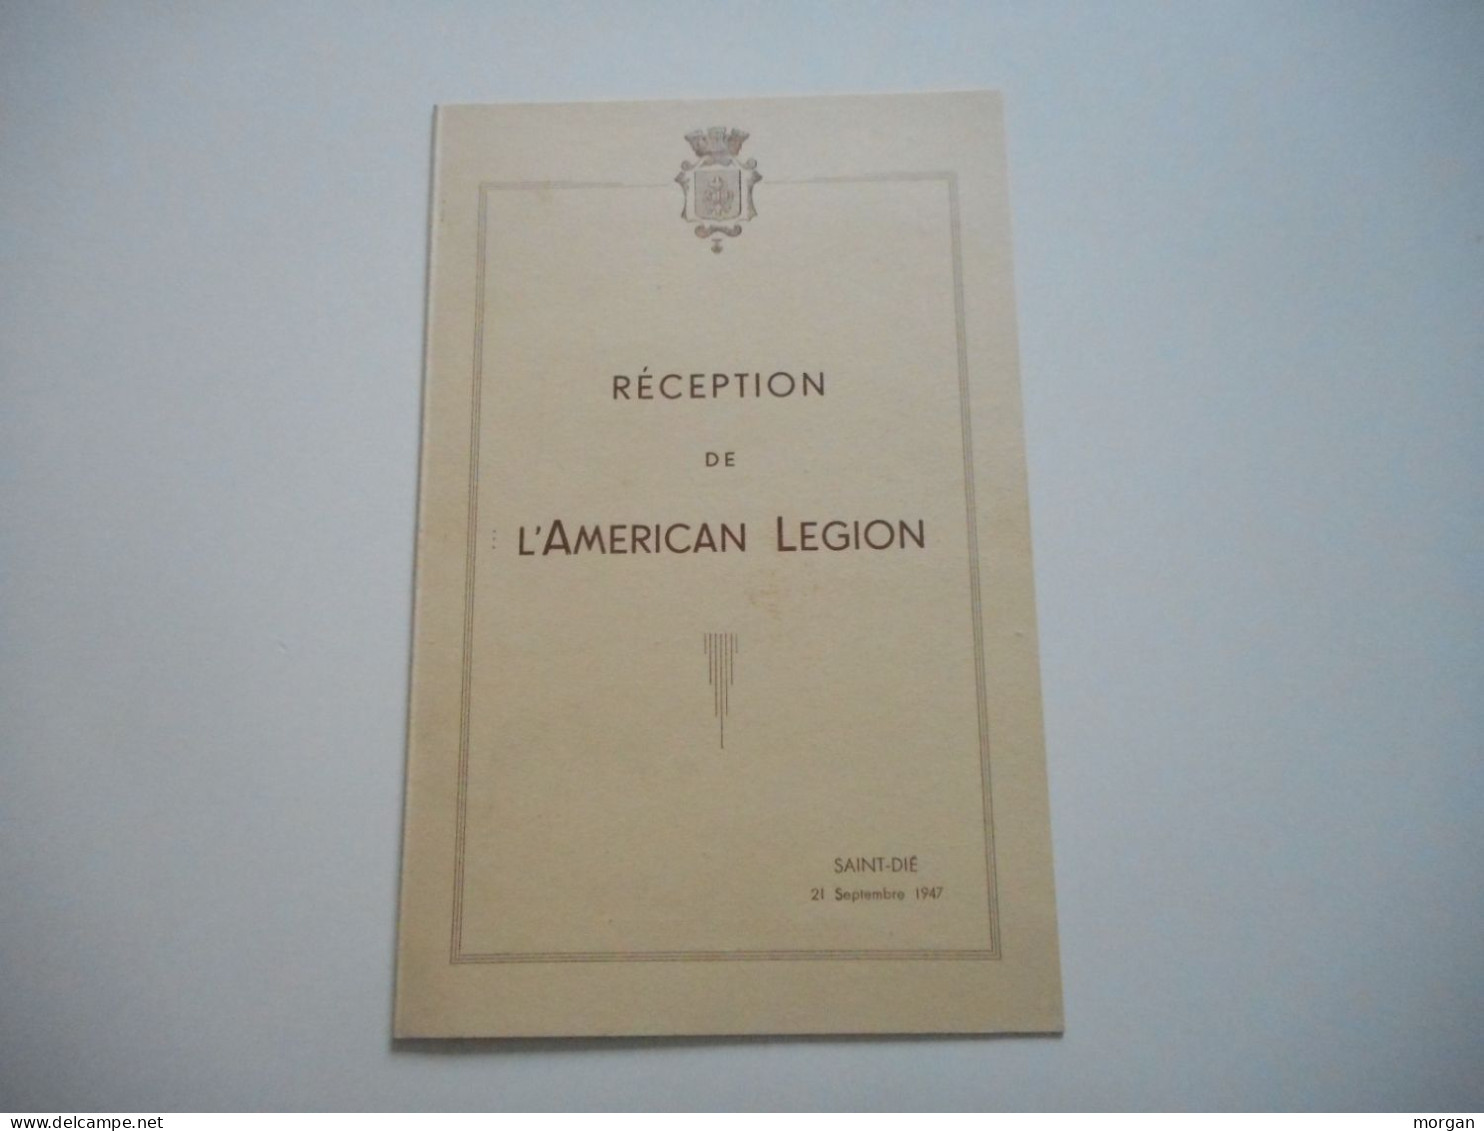 LORRAINE, VOSGES - SAINT DIE, 1947, RECEPTION DE L'AMERICAN LEGION, MENU ANCIEN - Lorraine - Vosges